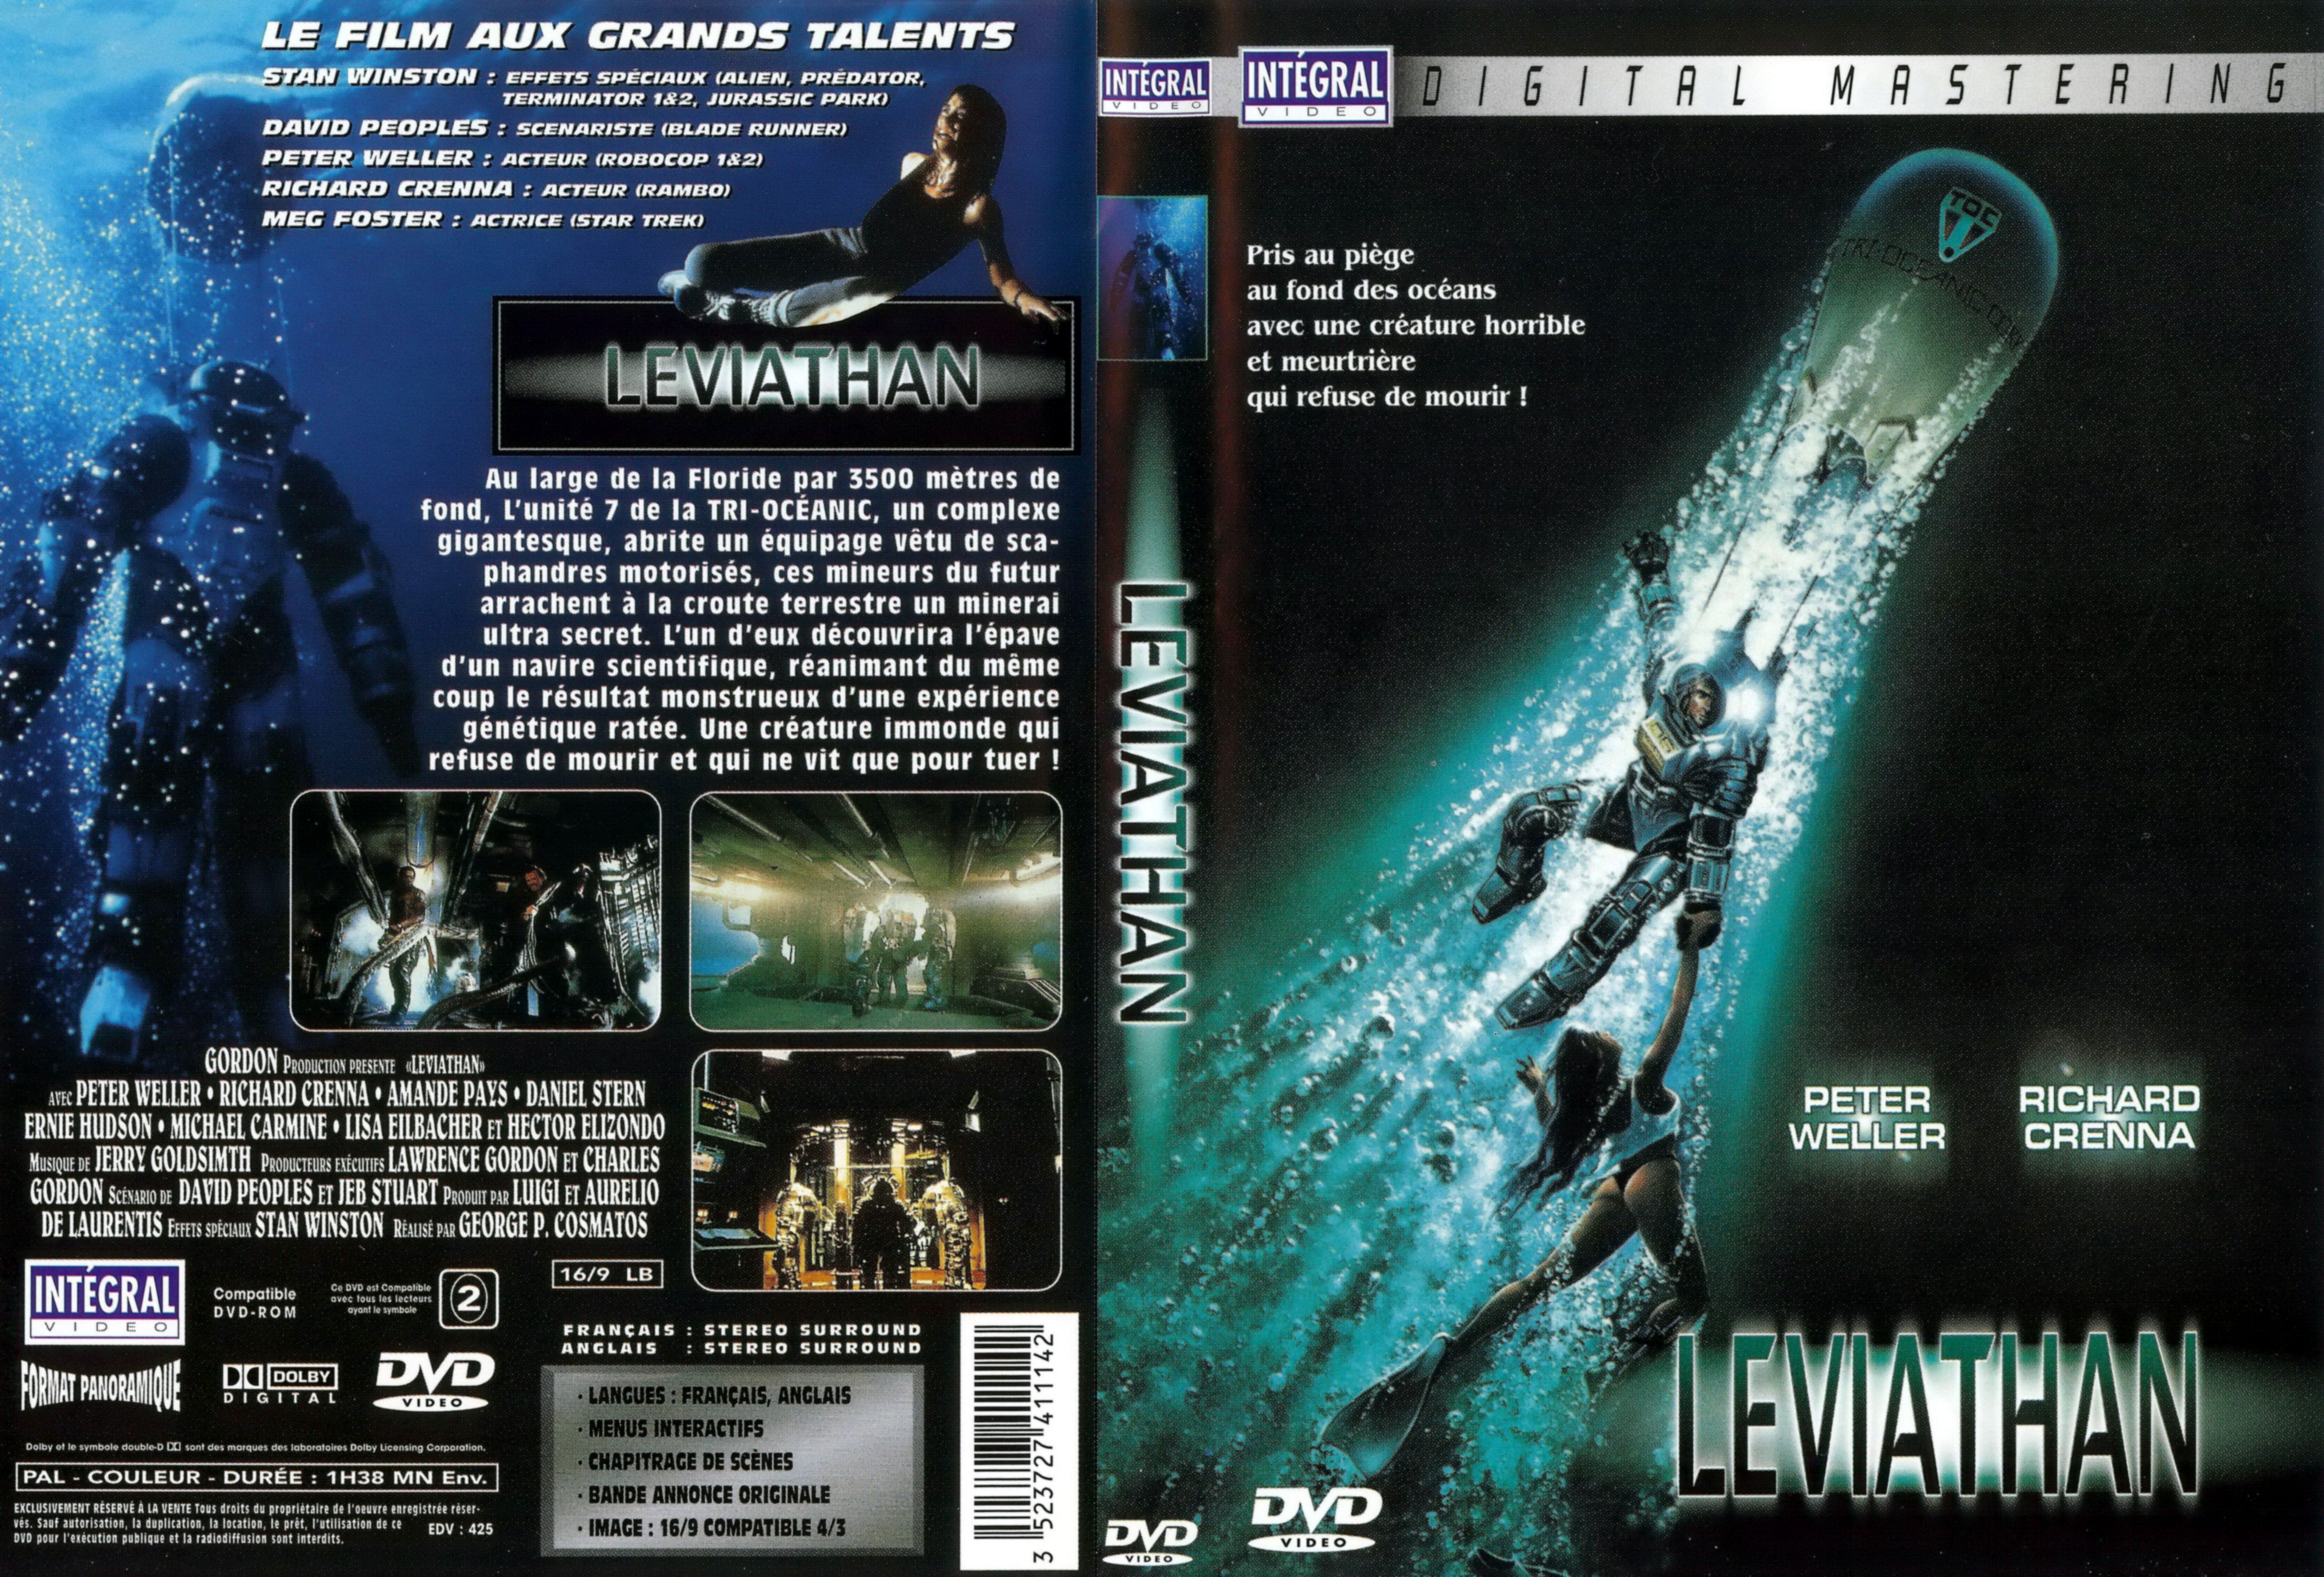 Jaquette DVD Leviathan v2